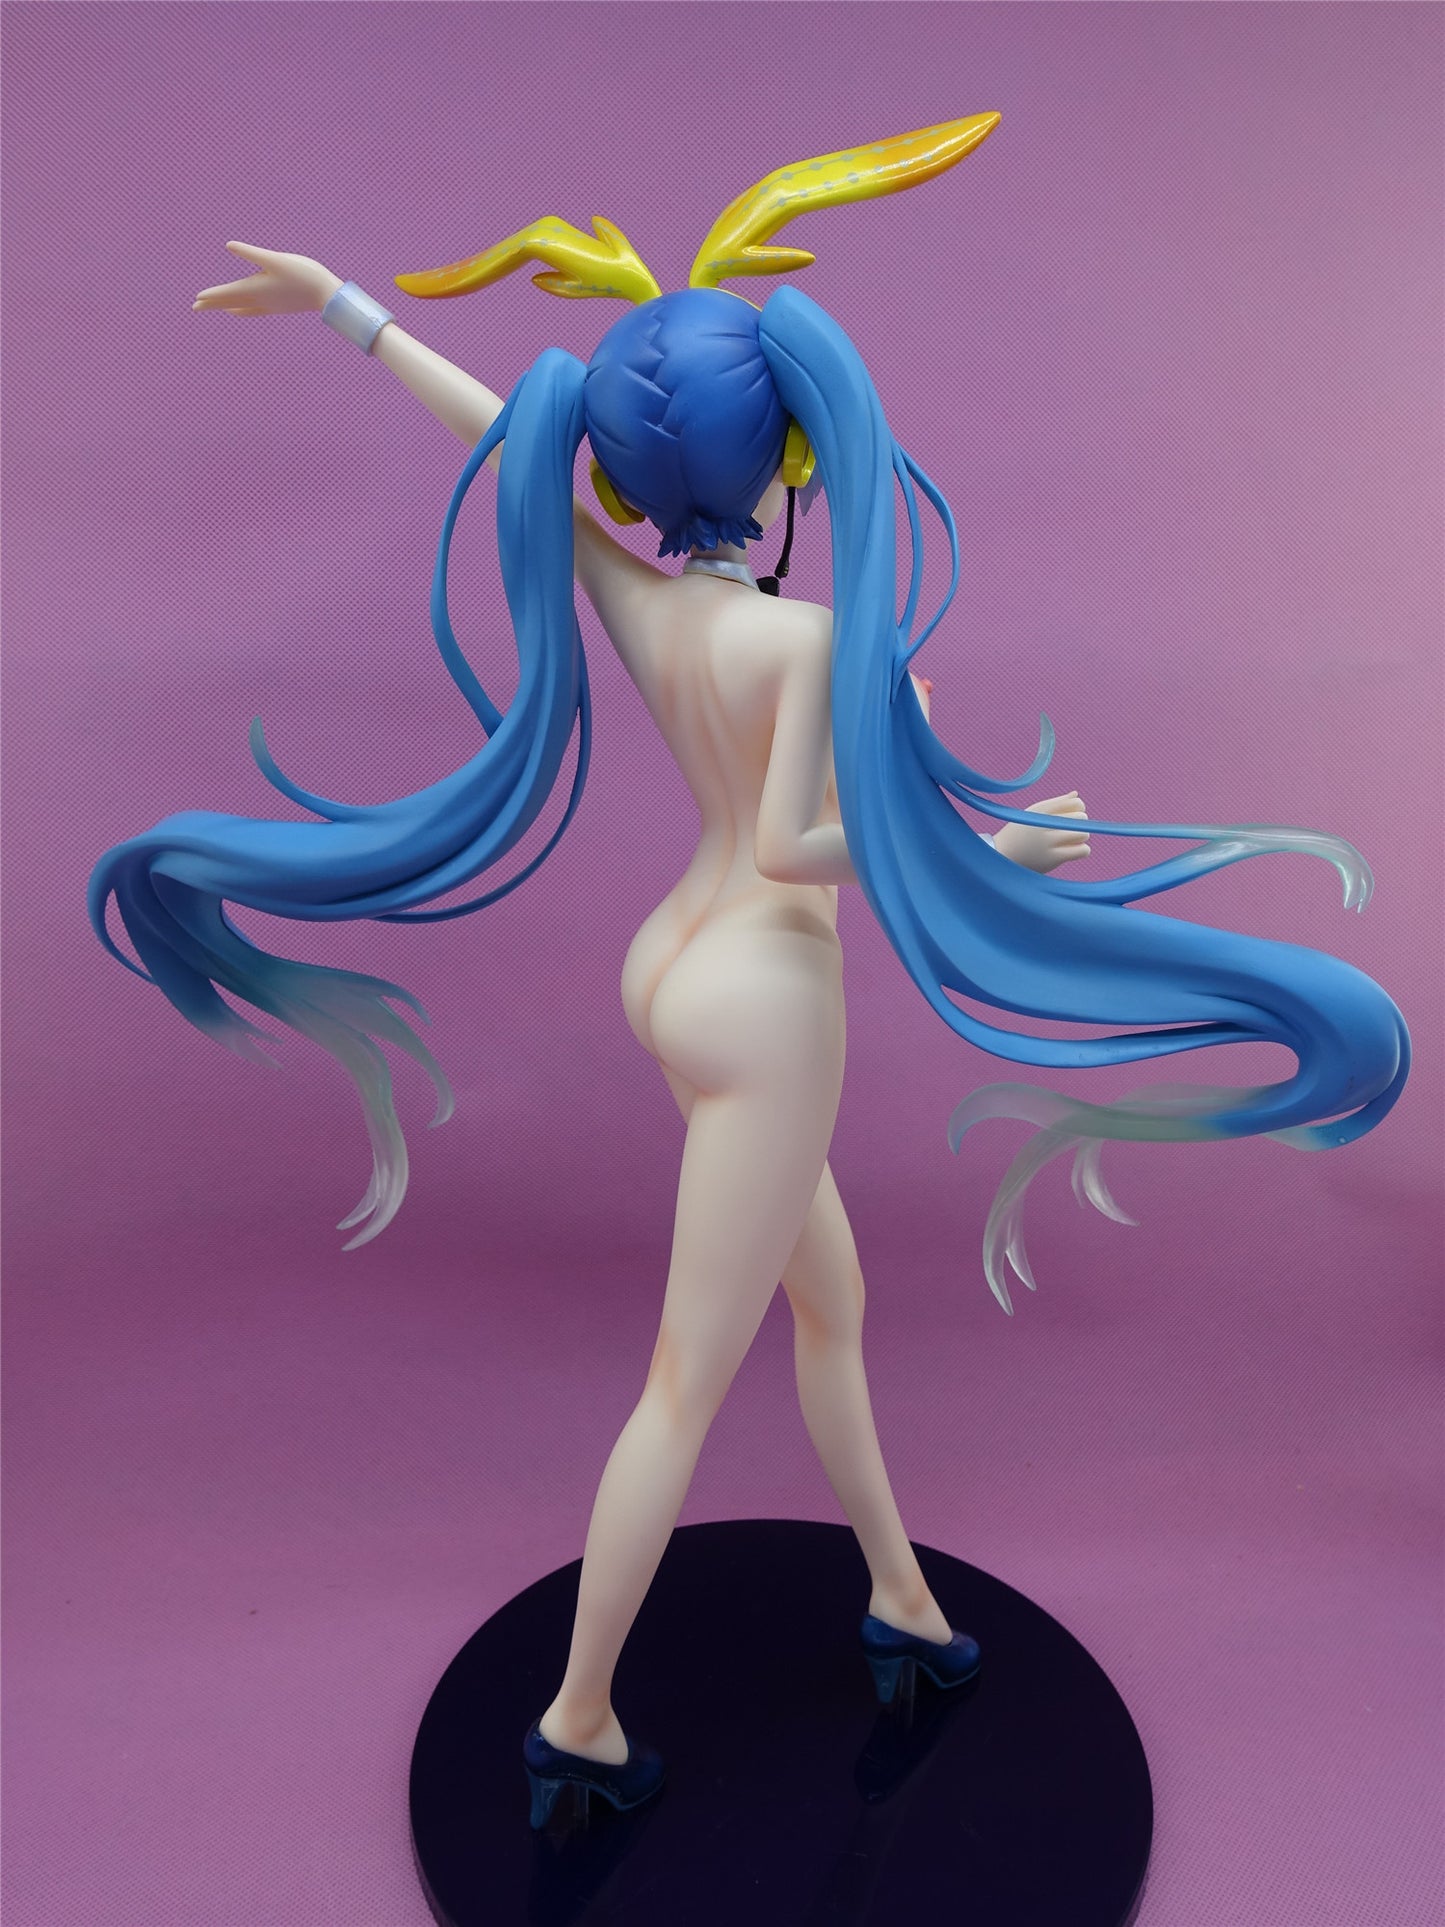 Hatsune Miku - B-style - 1/4 - My Dear Bunny Ver. (FREEing) naked anime figure